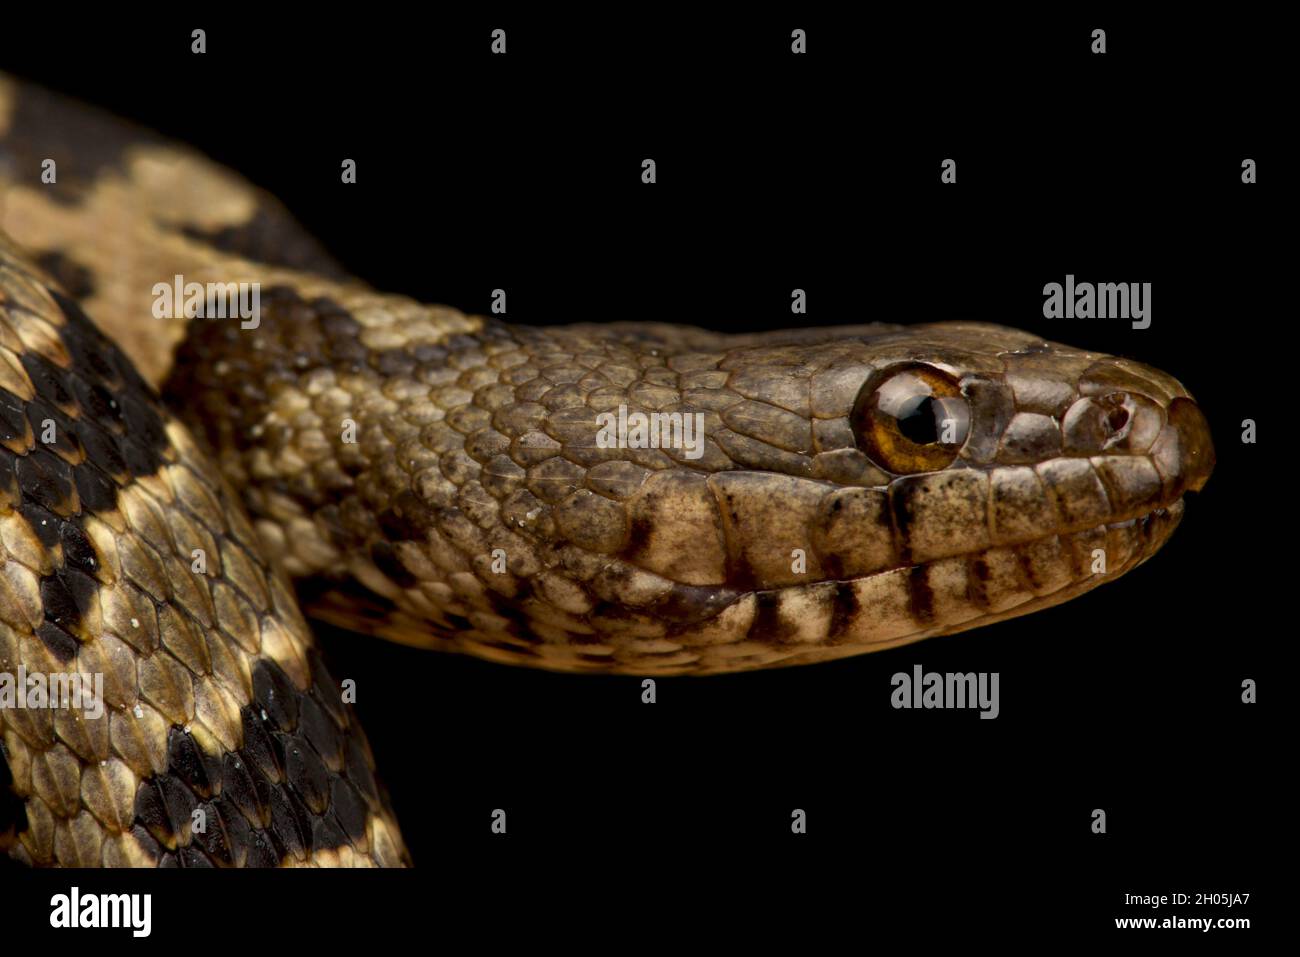 Brown Water Snake (Nerodia taxispilota) Stock Photo